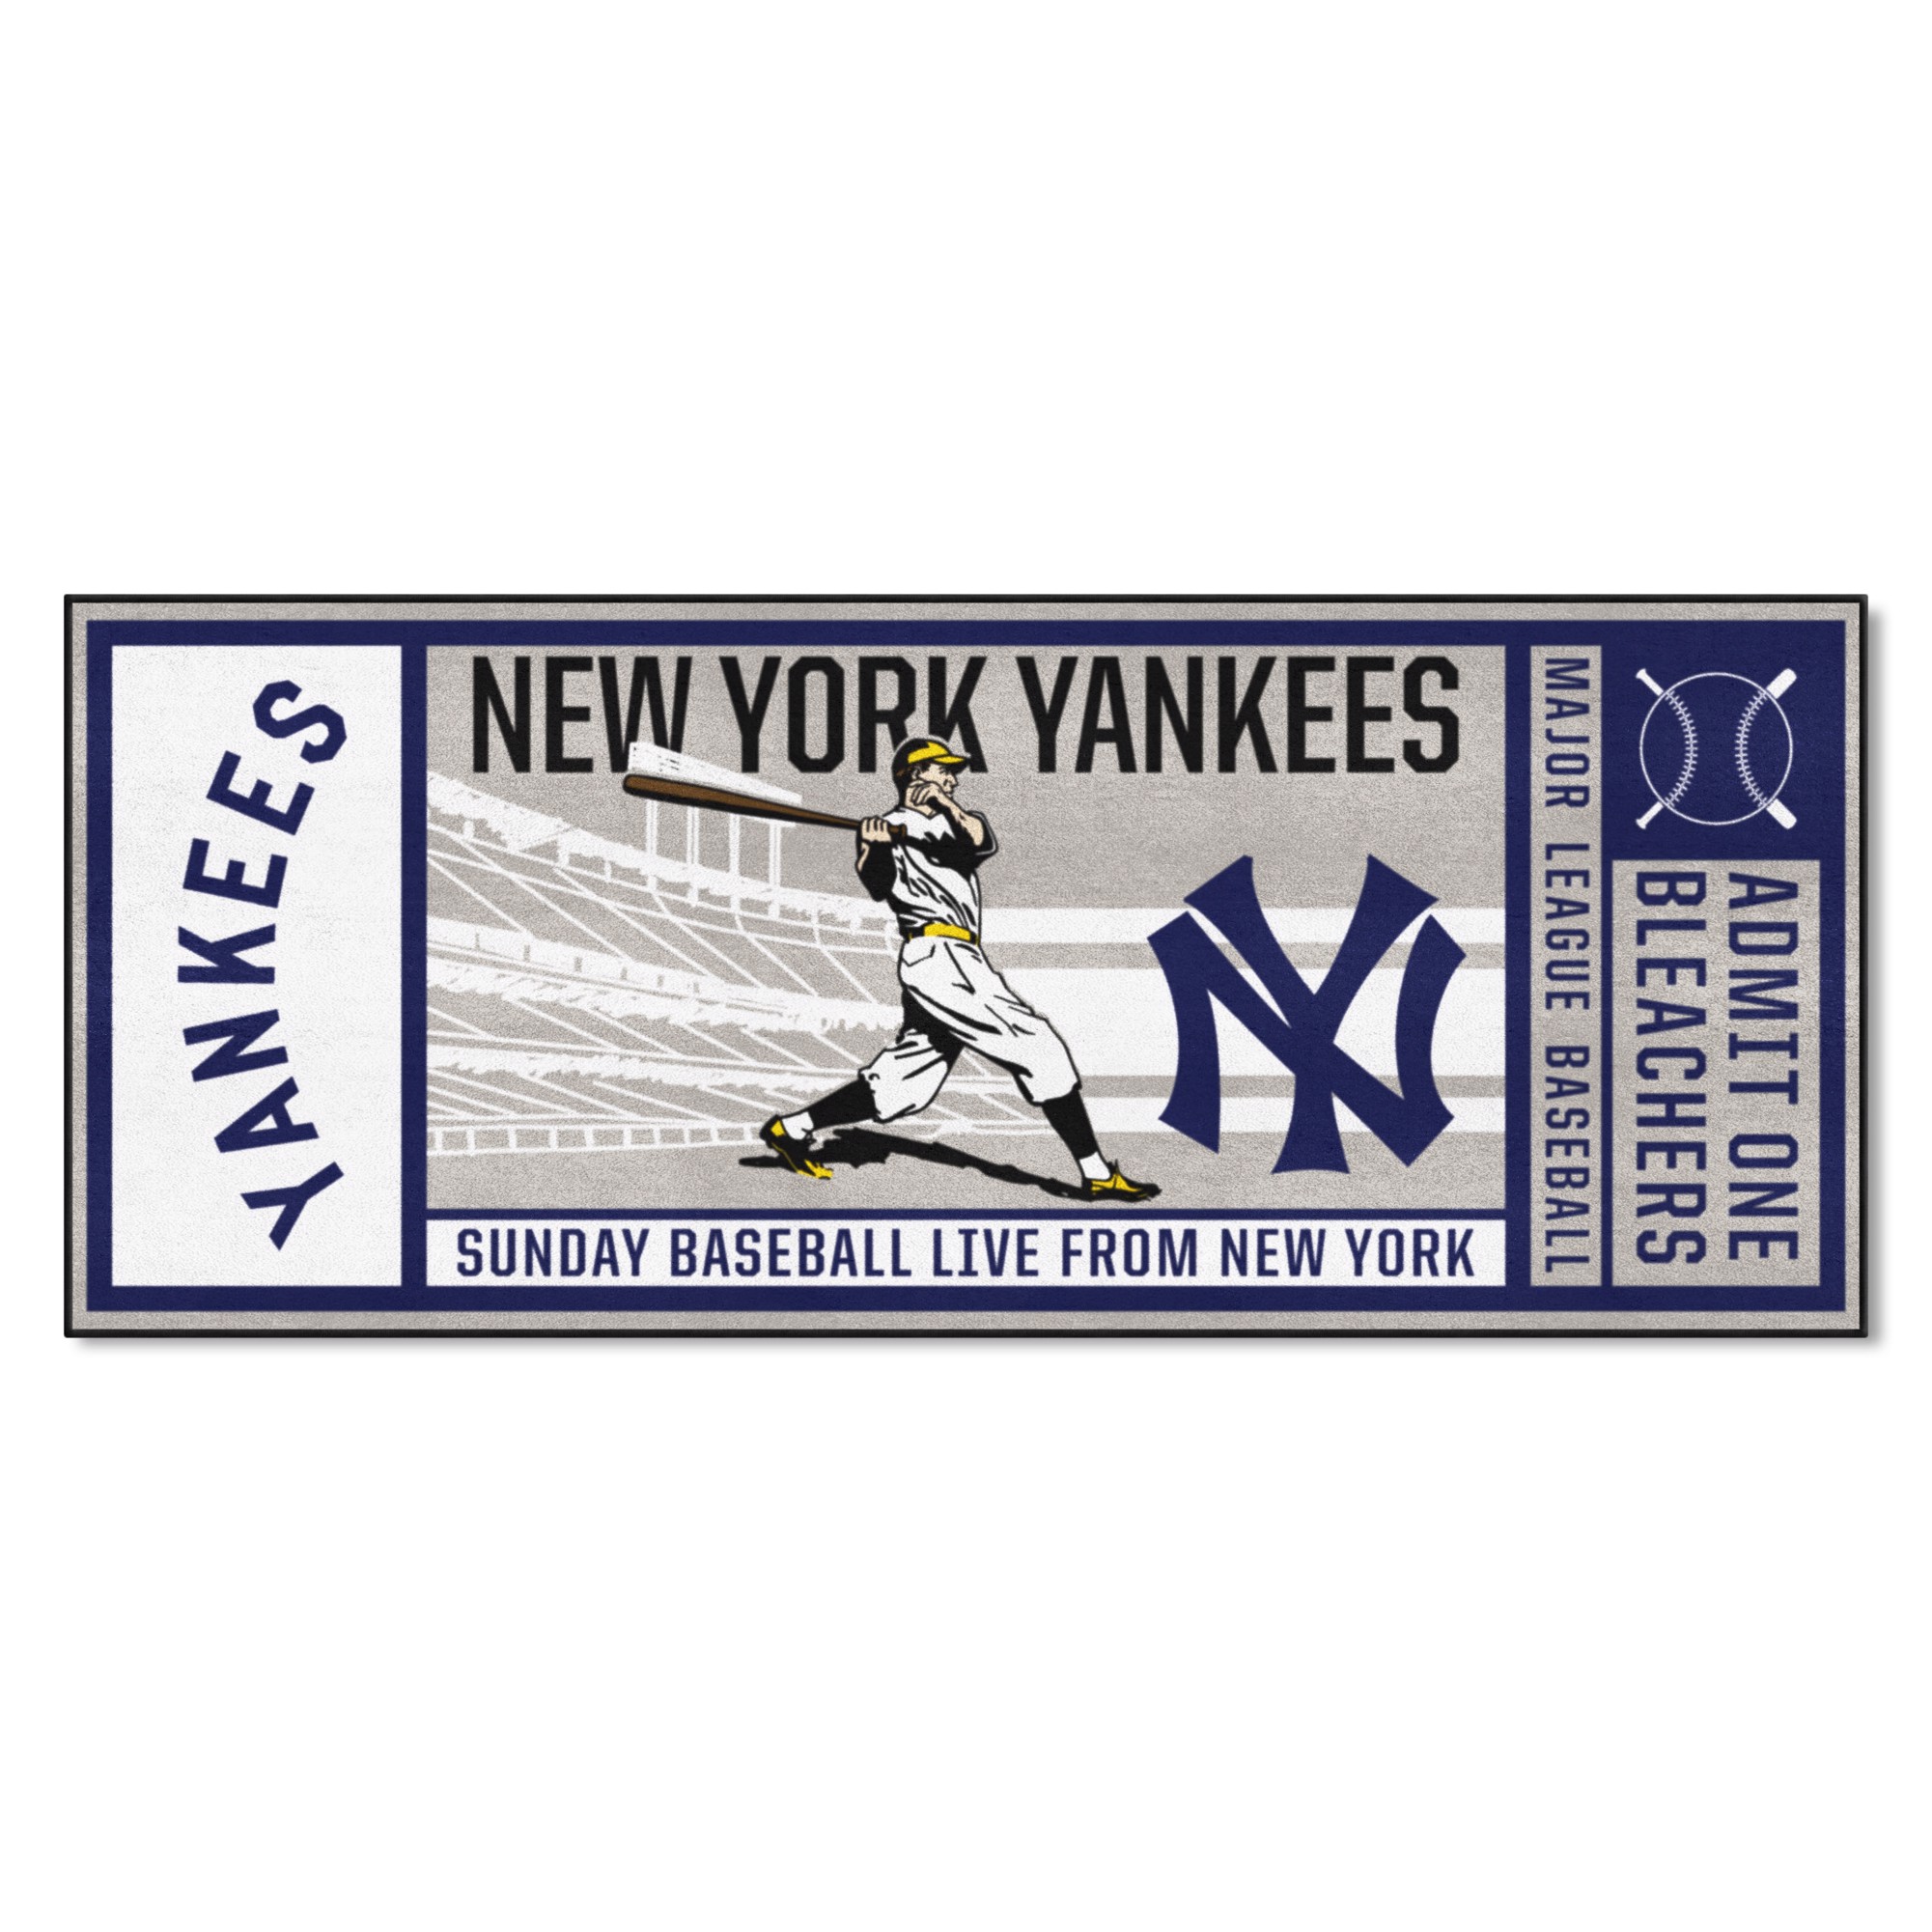 New York Yankees Throwback Jerseys, Vintage MLB Gear